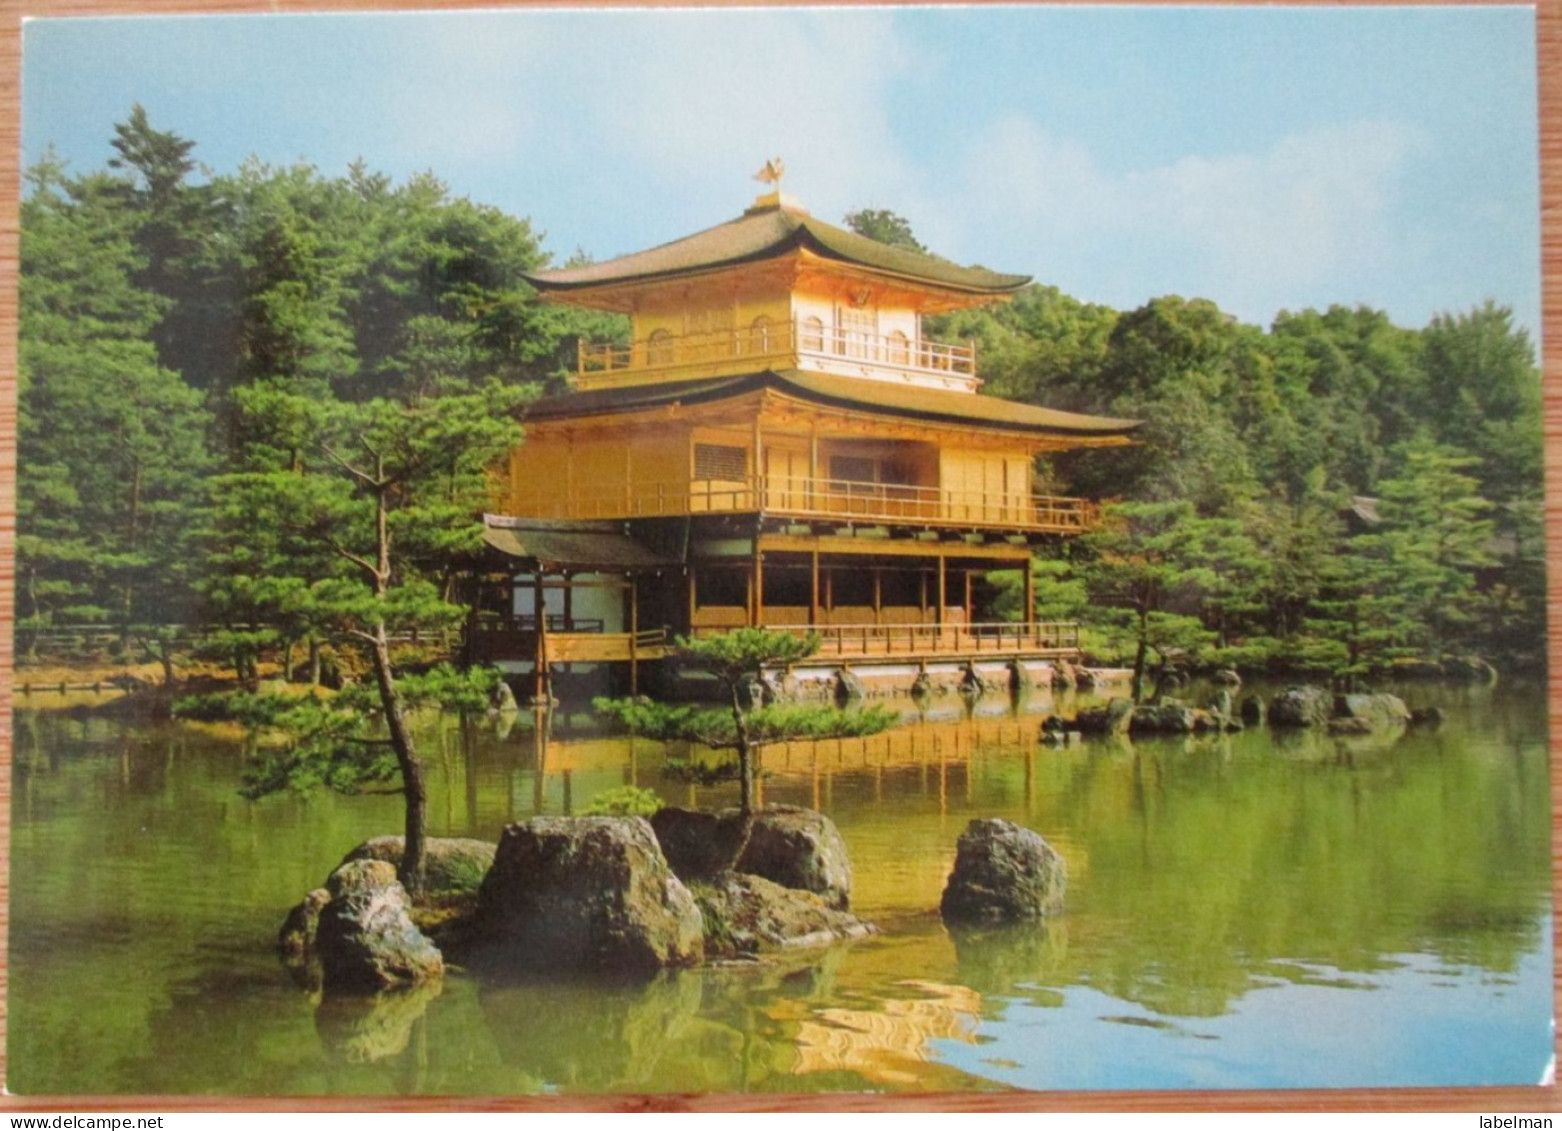 JAPAN KYOTO ROKUON JI TEMPLE POSTCARD ANSICHTSKARTE PICTURE CARTOLINA PHOTO CARD POSTKARTE CARTE POSTALE KARTE - Tokyo